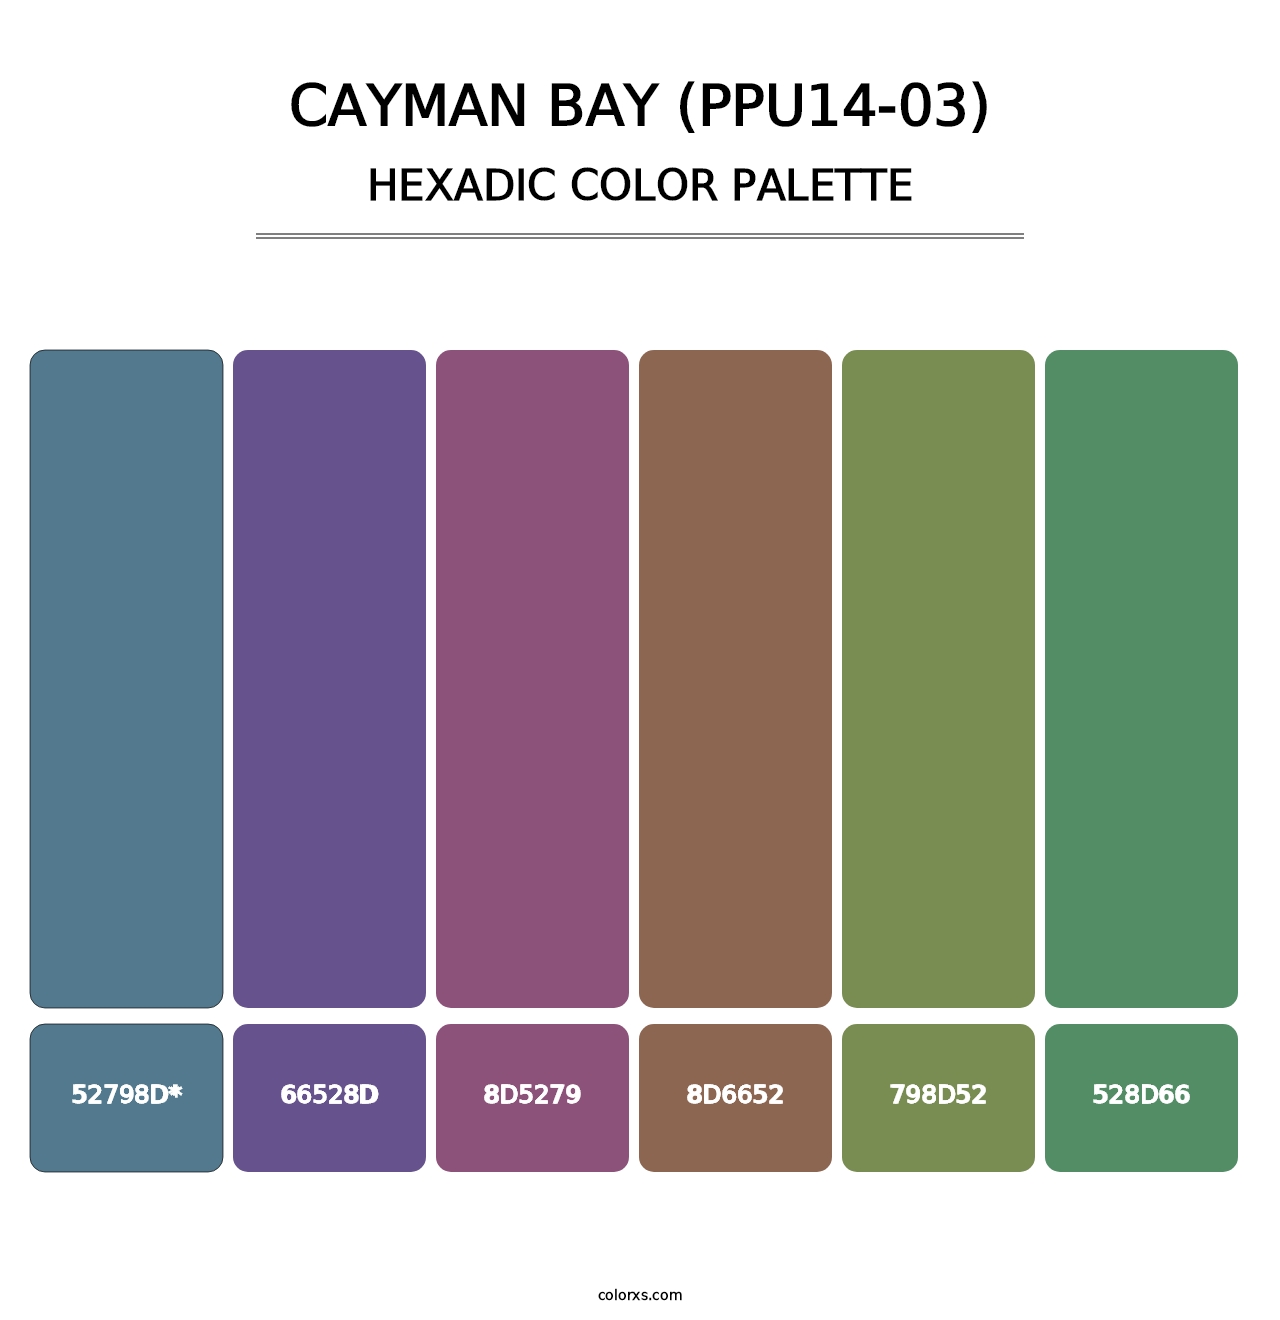 Cayman Bay (PPU14-03) - Hexadic Color Palette